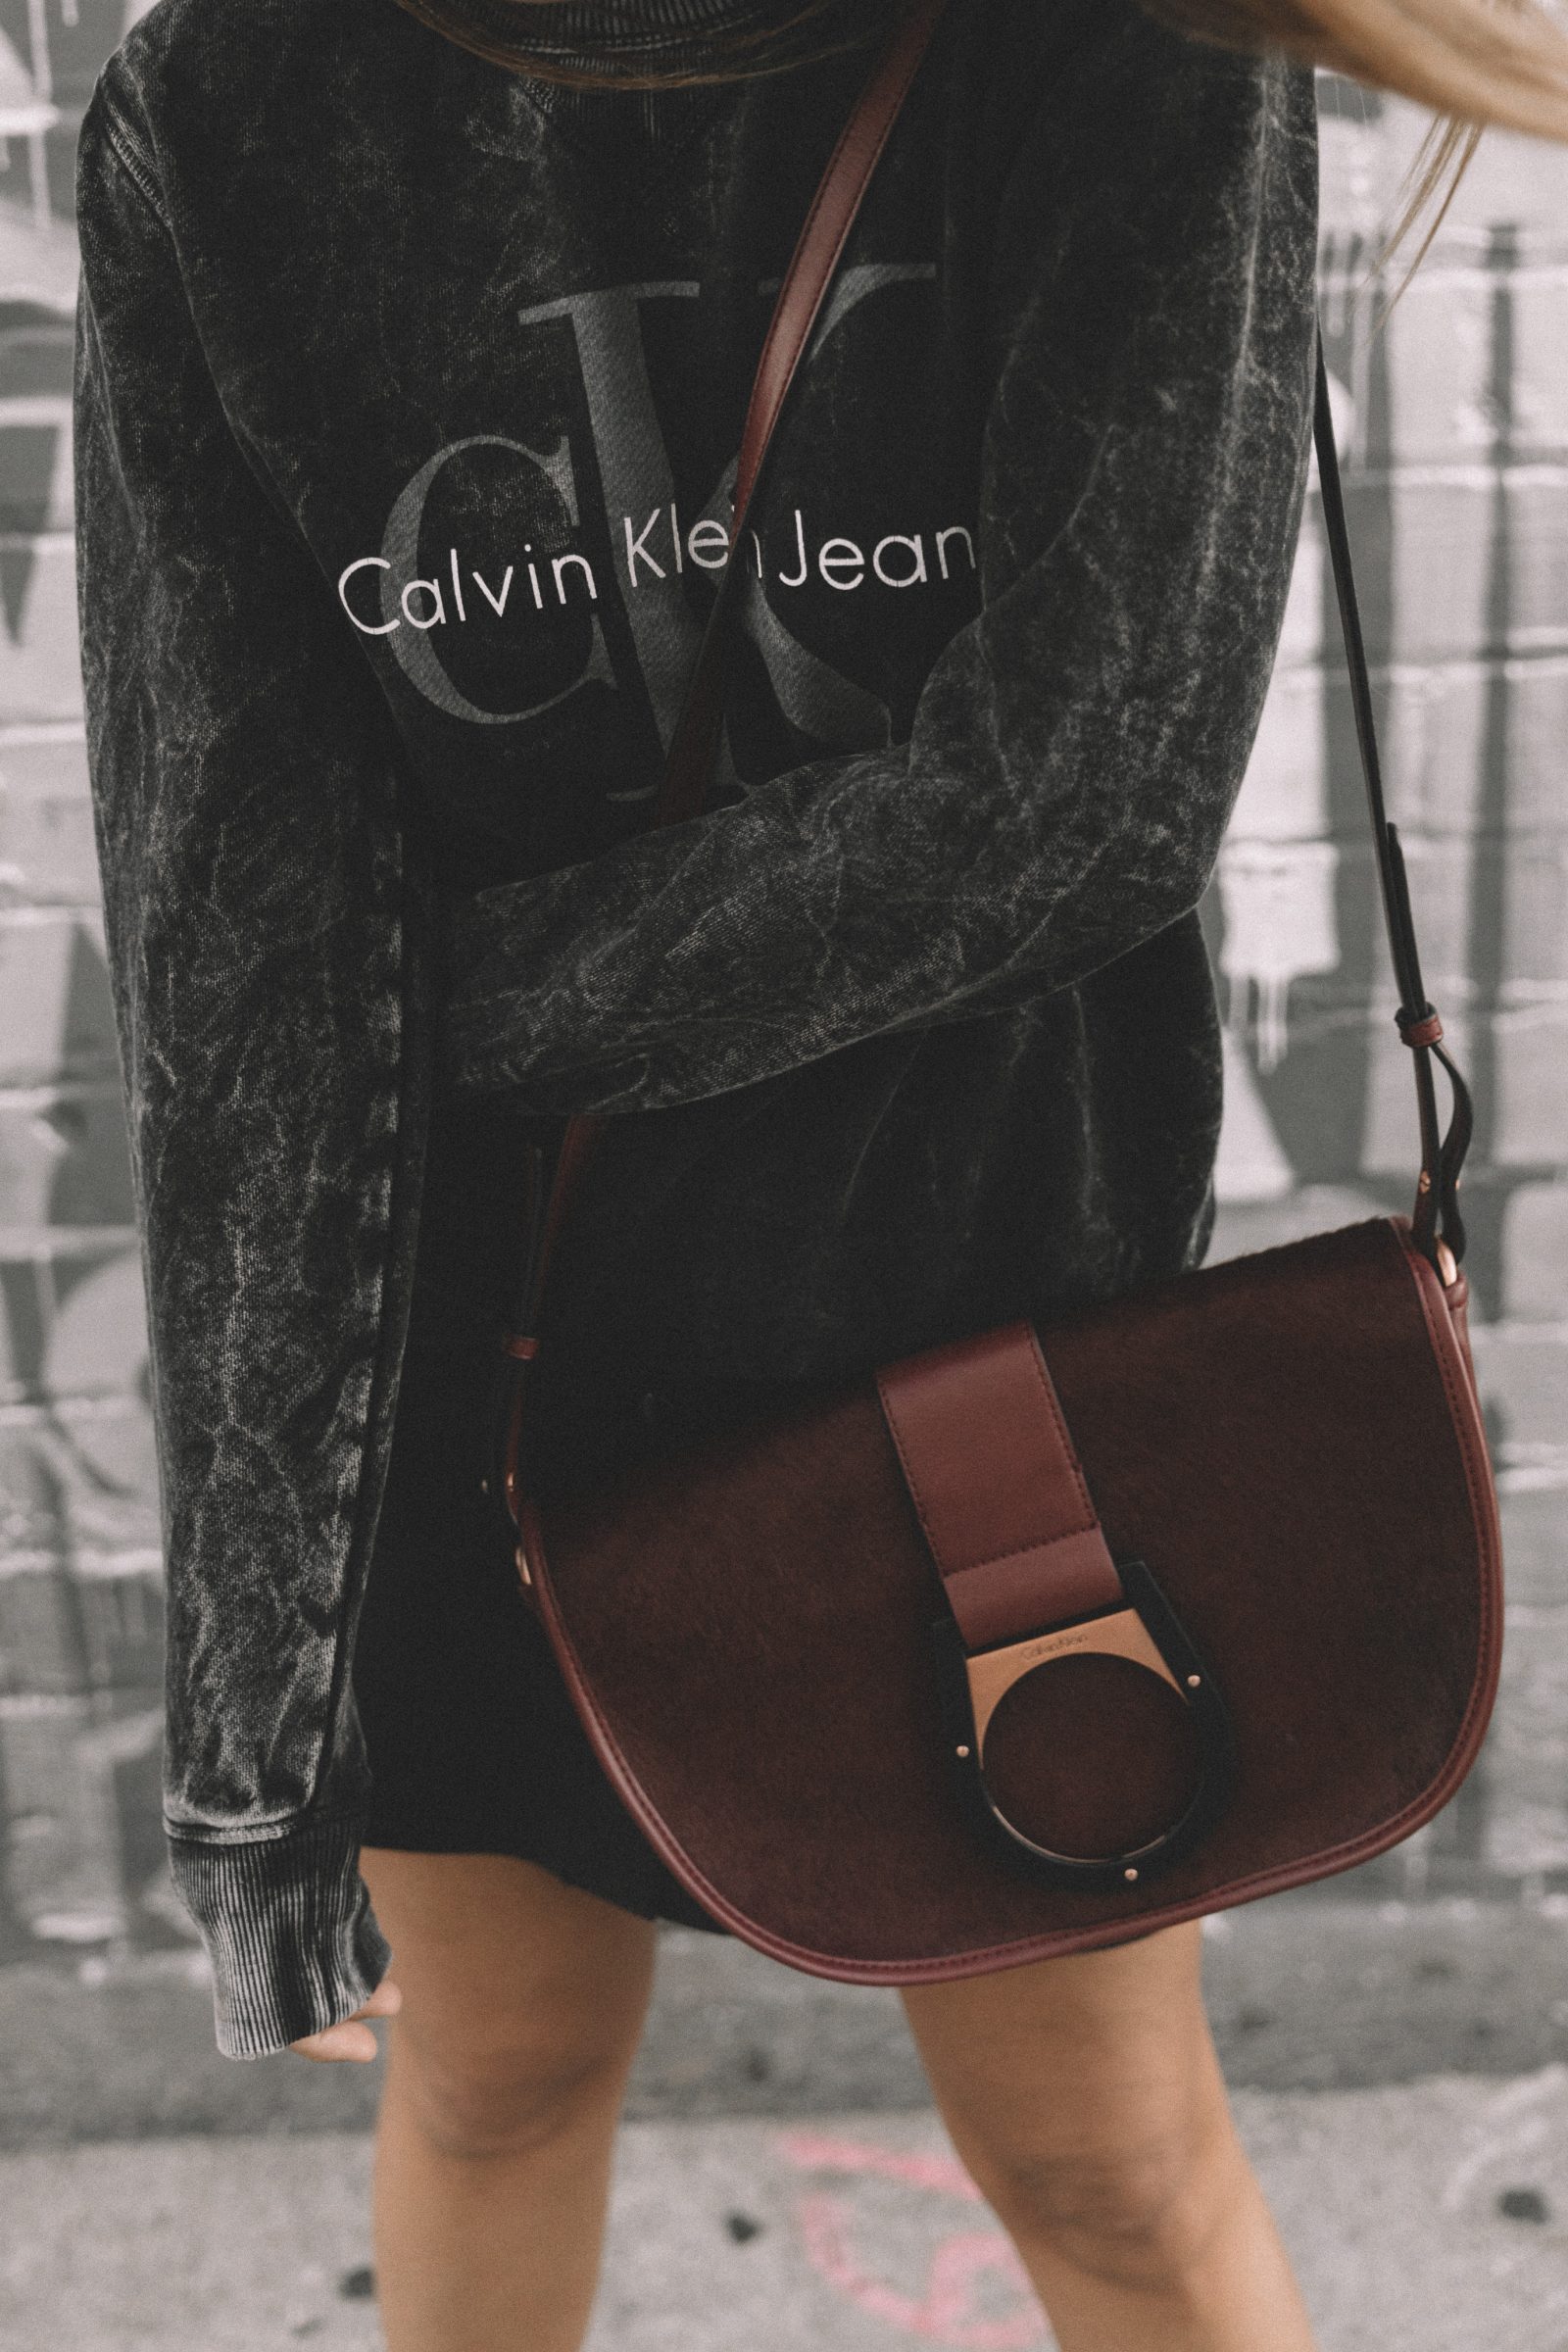 calvin_klein_bag-burgundy_bag-ck_sweatshirt-leather_shirt-total_black_outfit-street_style-los_angeles-collage_vintage-47